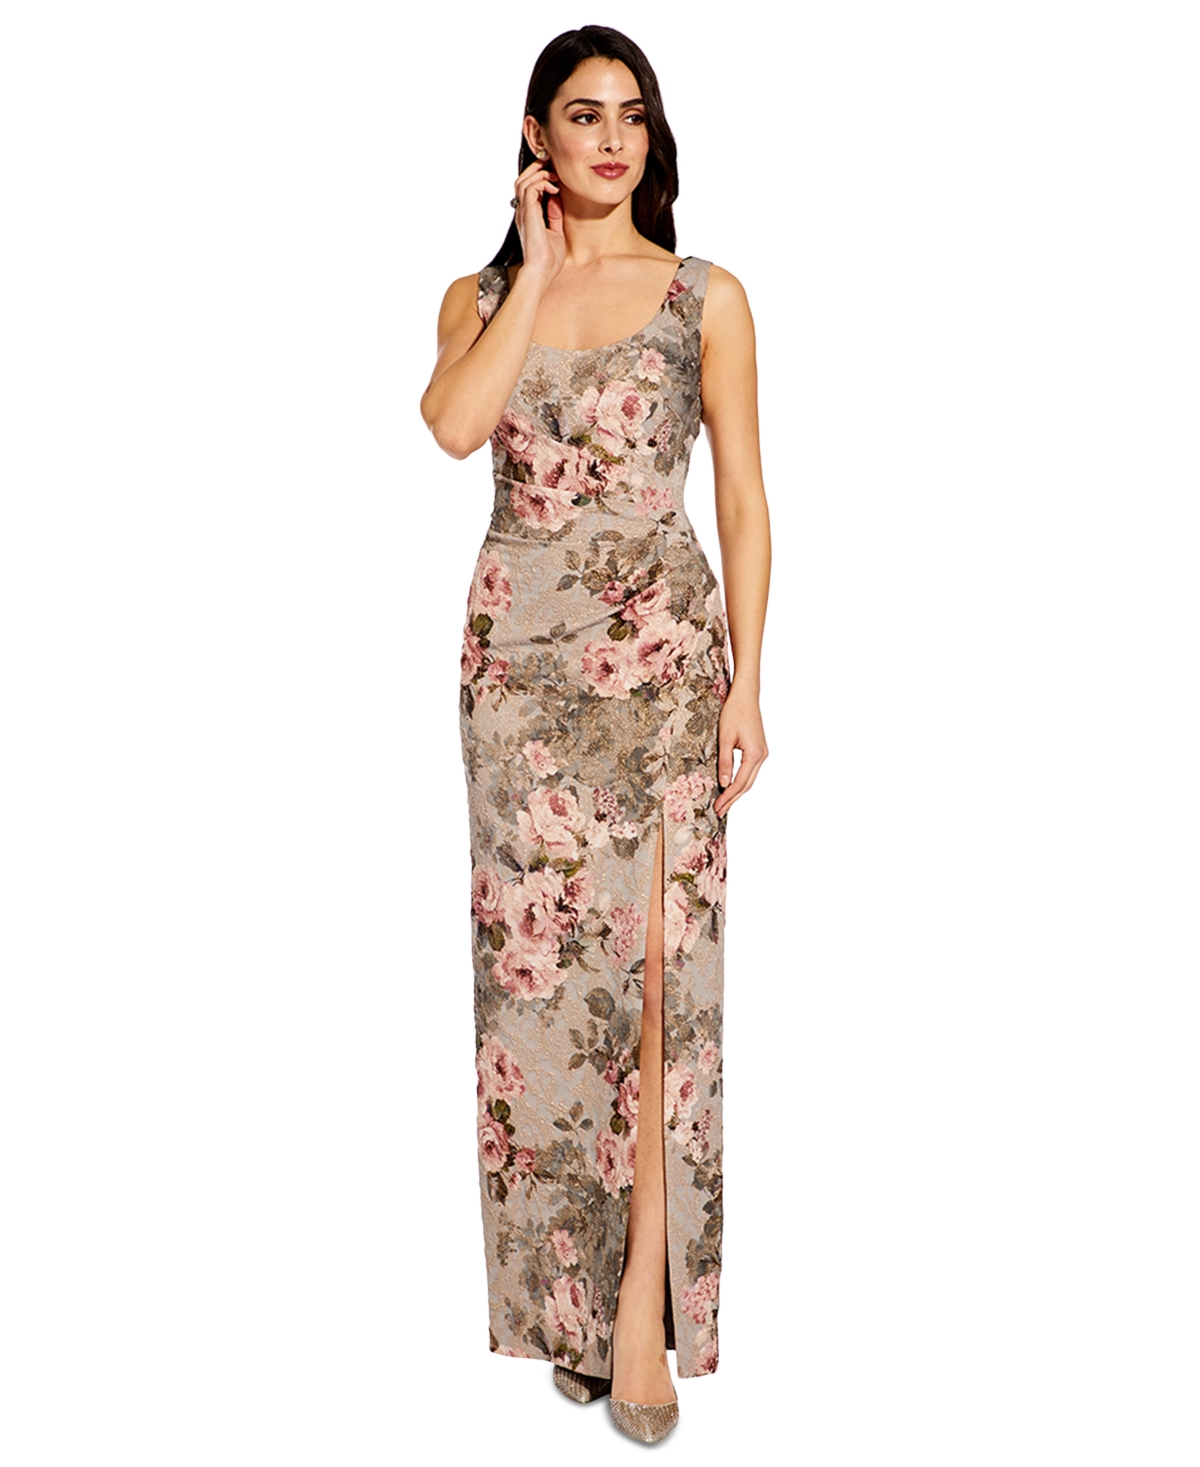 Women's Metallic Floral-Print Column Gown - Beige/Blush Floral